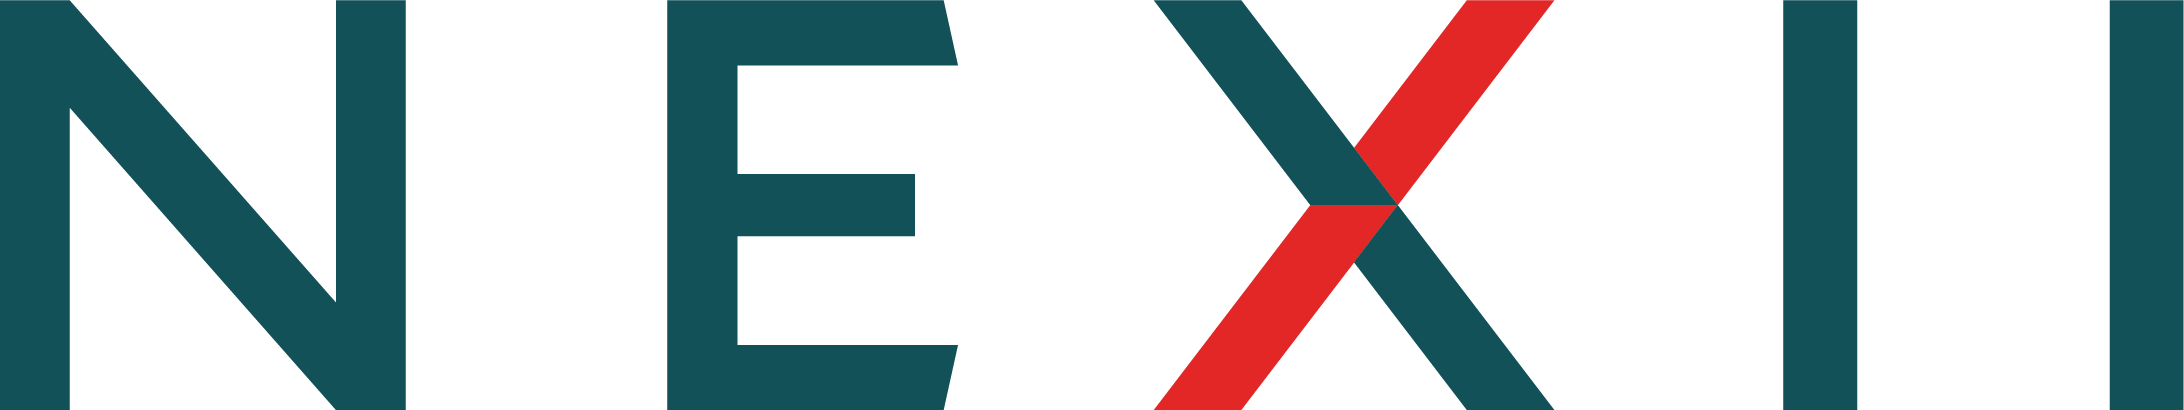 NEXII_Logo_ConsumerPalette_CMYK_DK.png